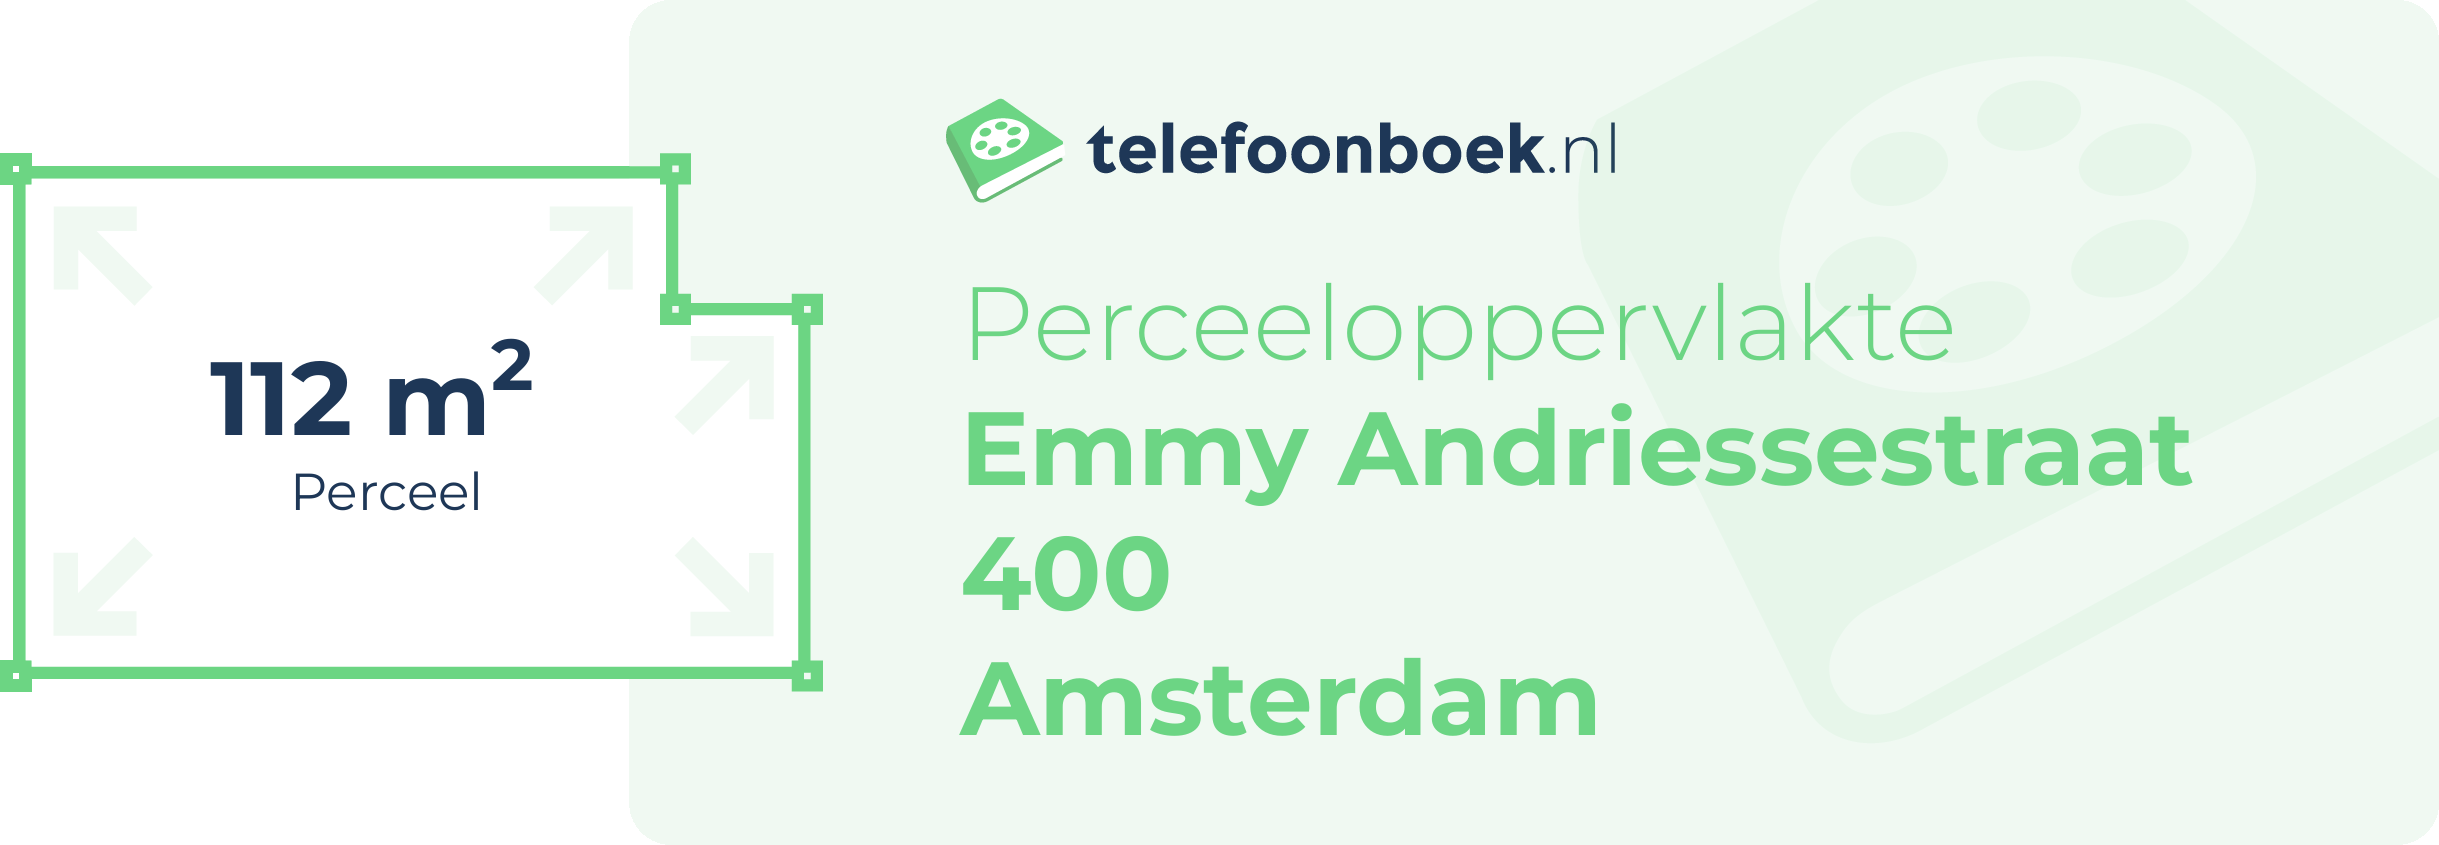 Perceeloppervlakte Emmy Andriessestraat 400 Amsterdam